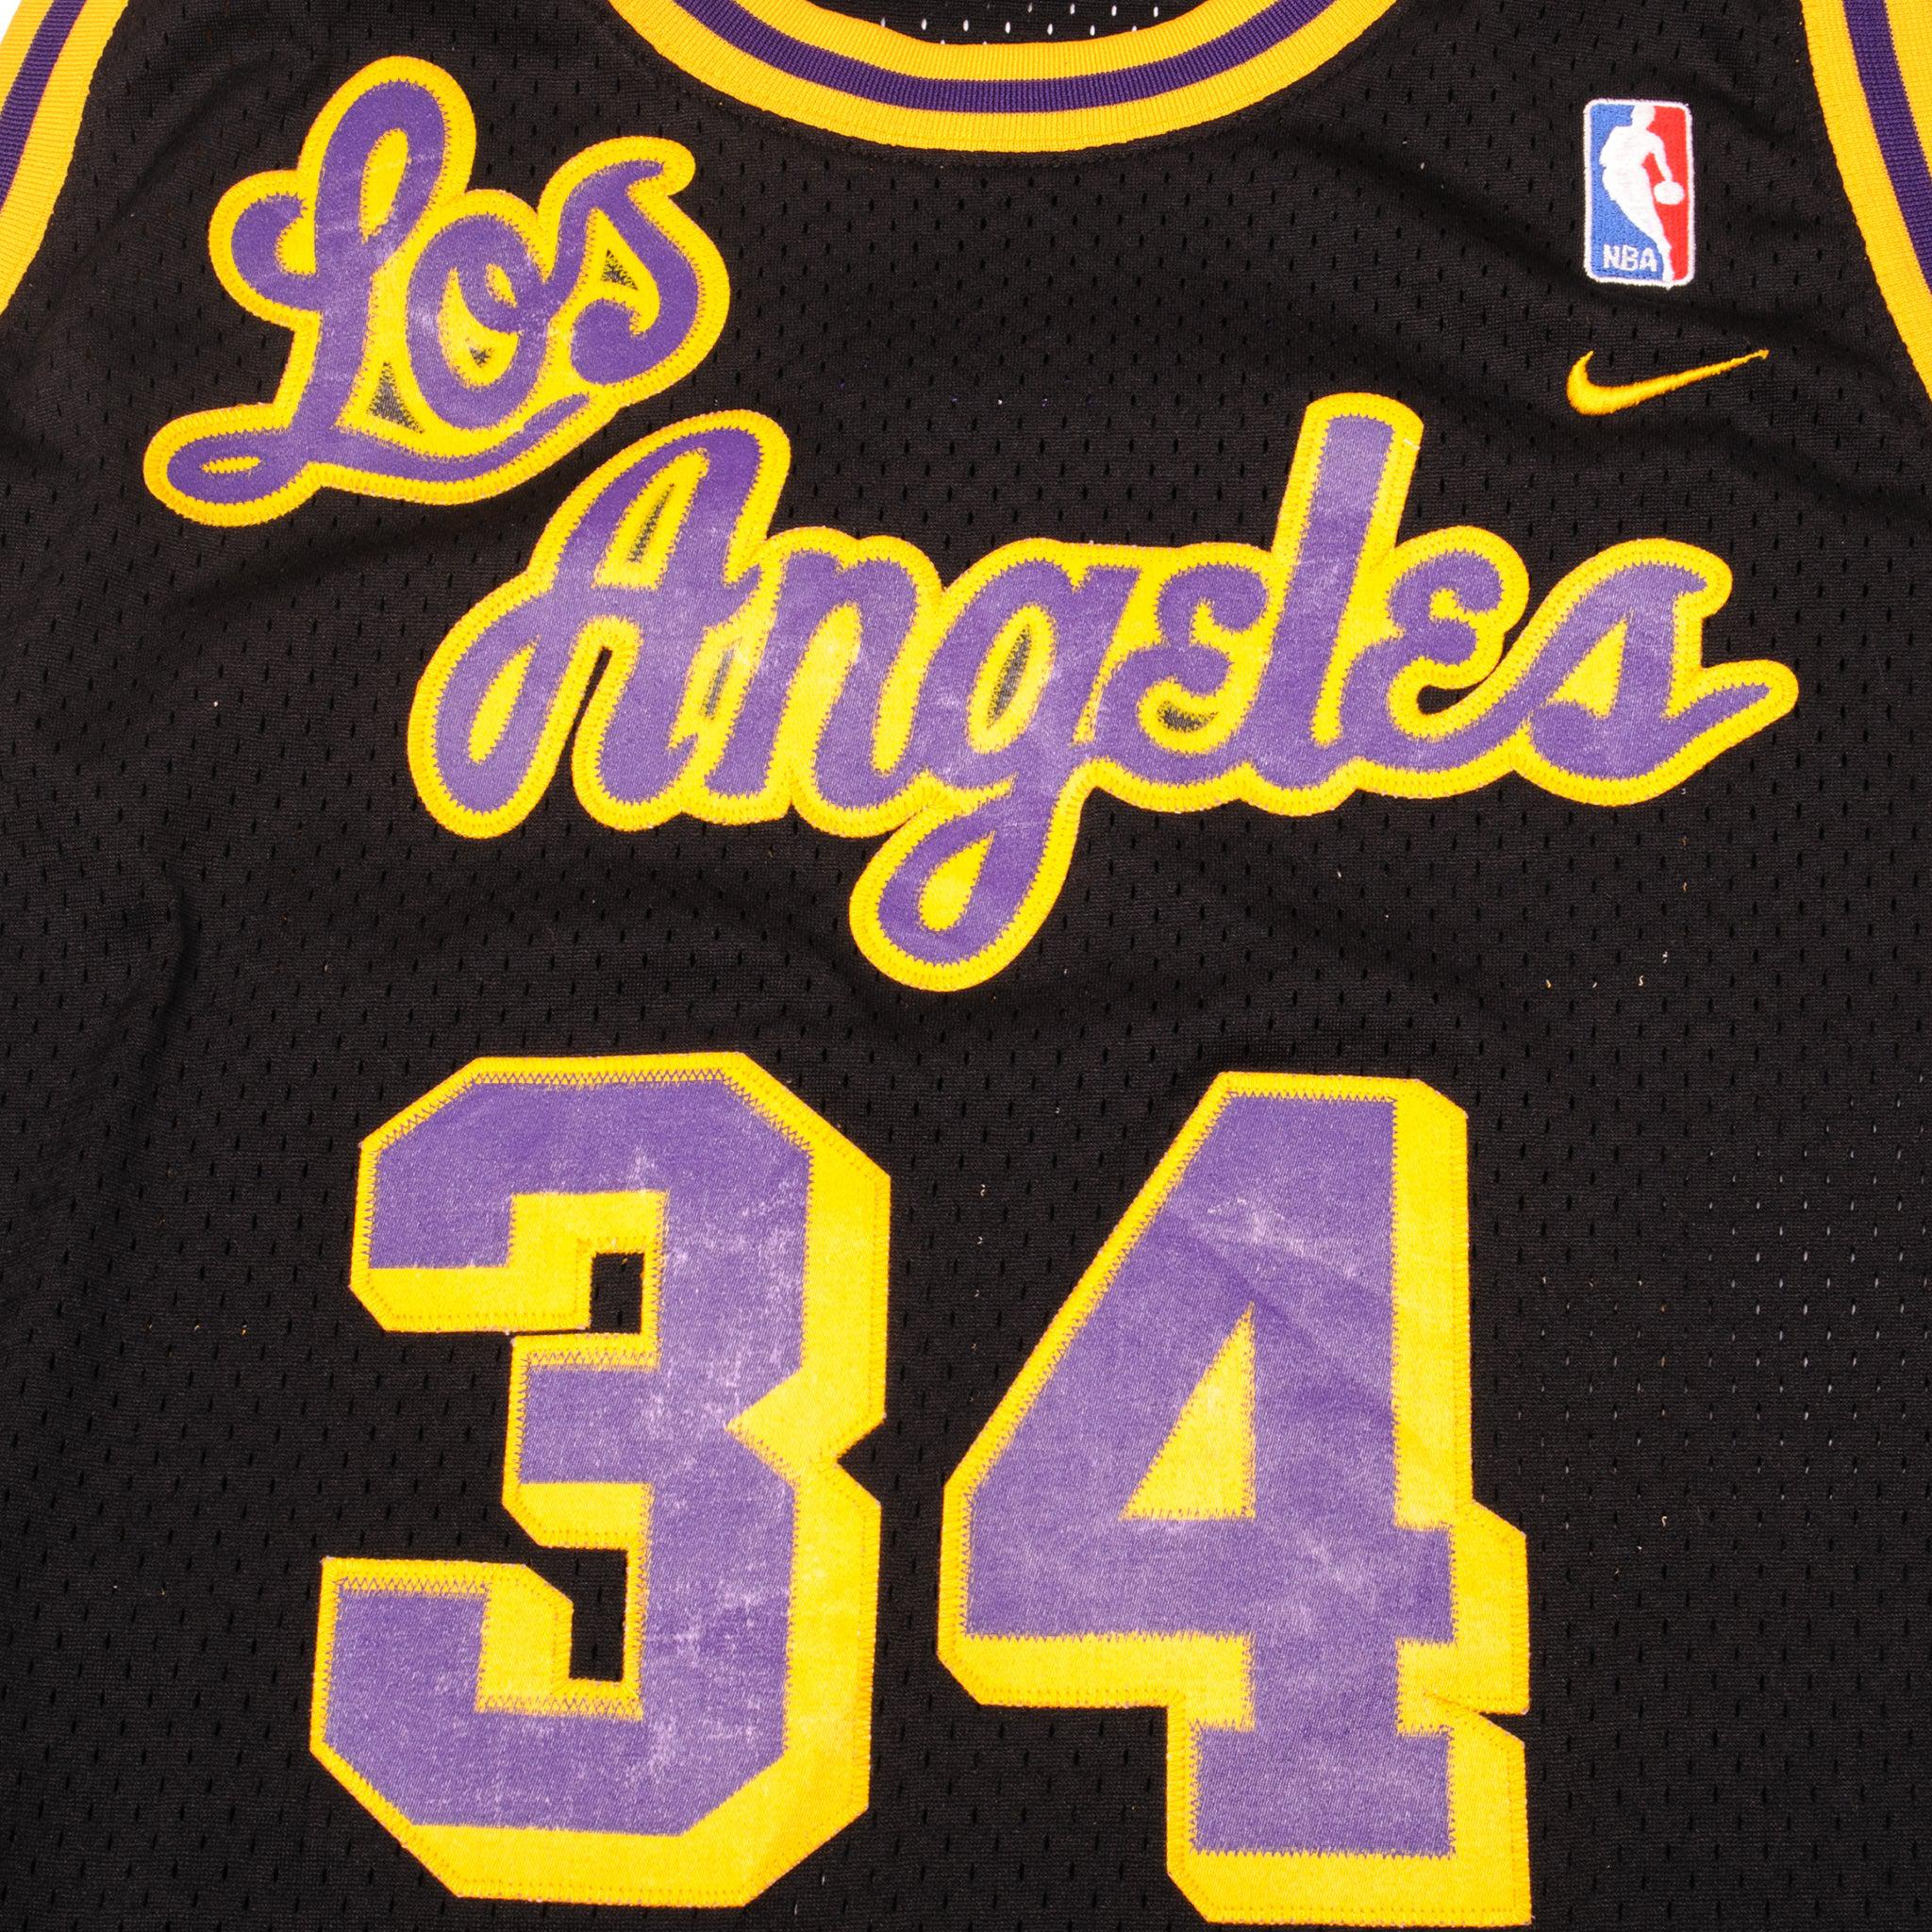 SHAQ Los Angeles Lakers 2003 Hardwood O'neal 34 Nike -  Norway